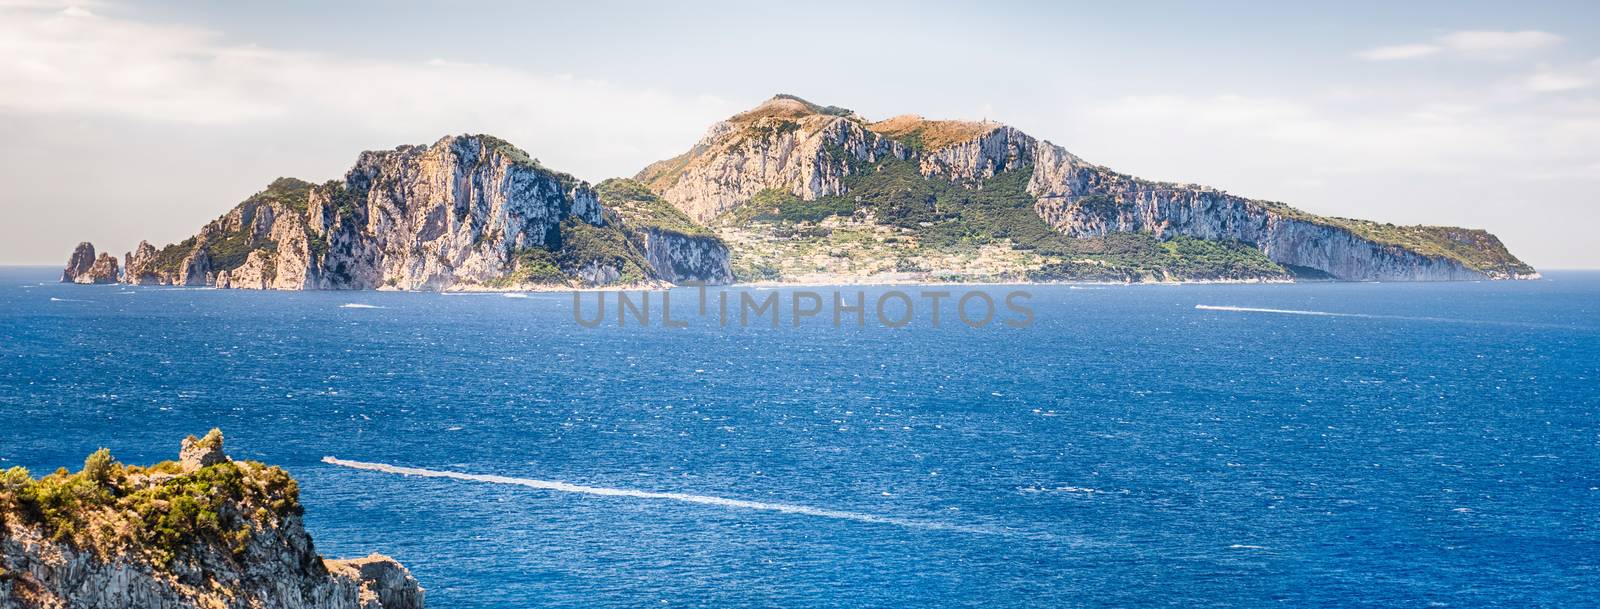 Scenic aerial view with the Island of Capri, Italy by marcorubino